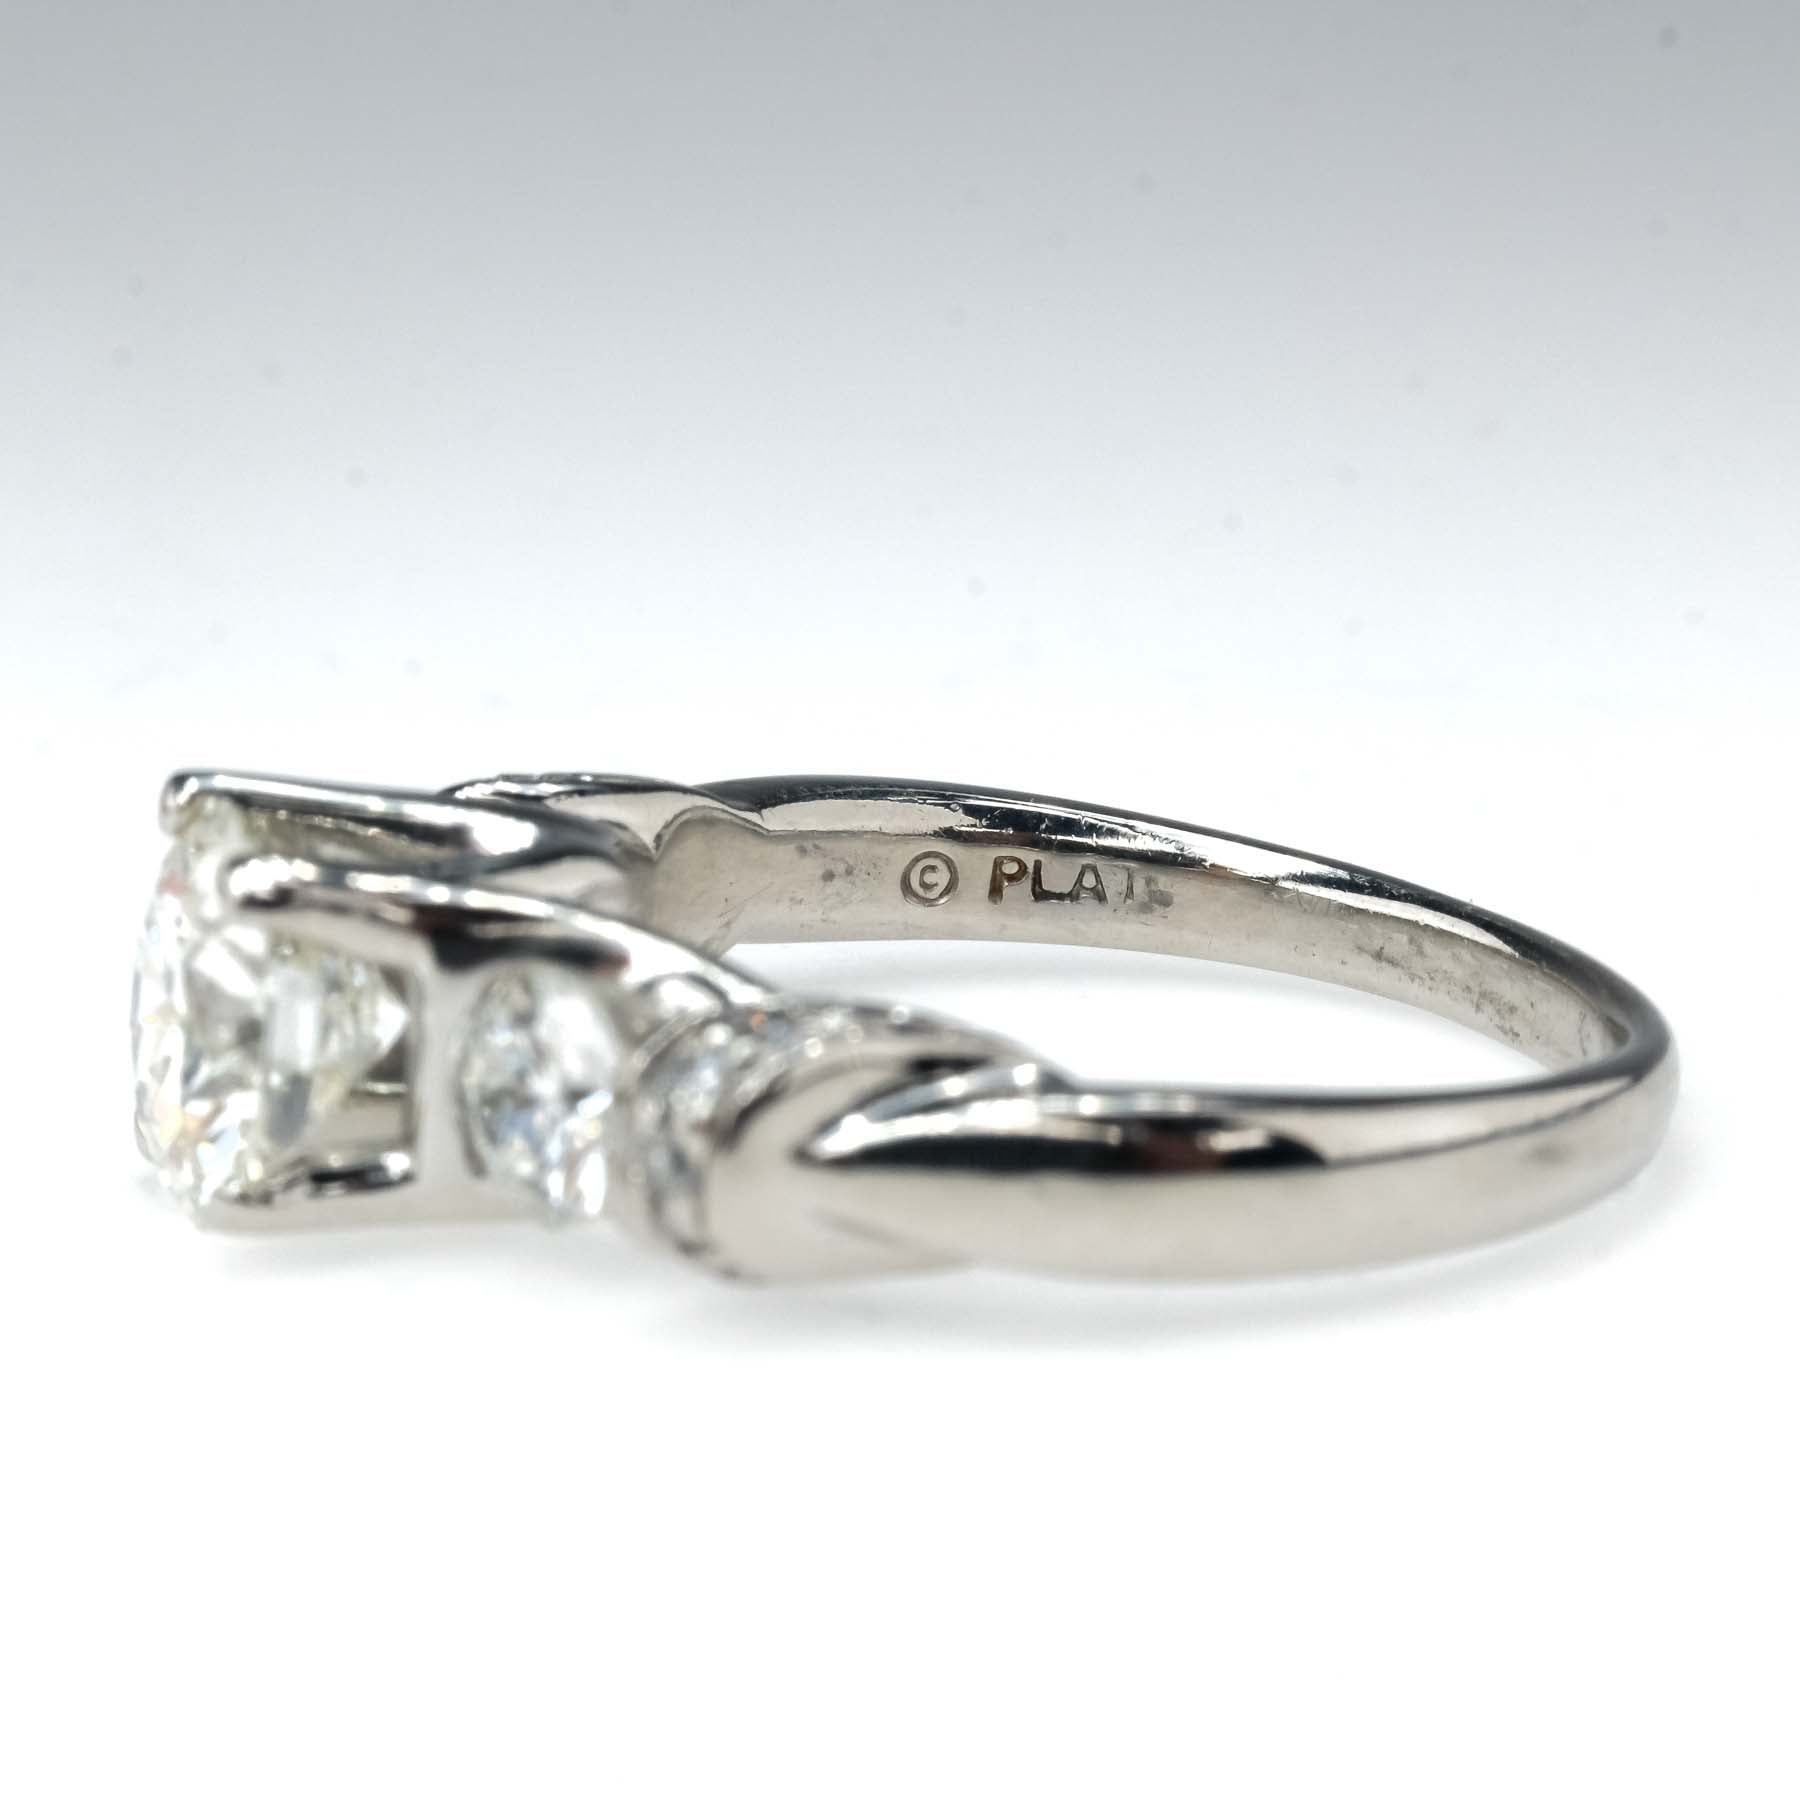 Men's 3-Stone Diamonds 8.5mm 14k Yellow Gold Ring, (0.33 Ct, G-H